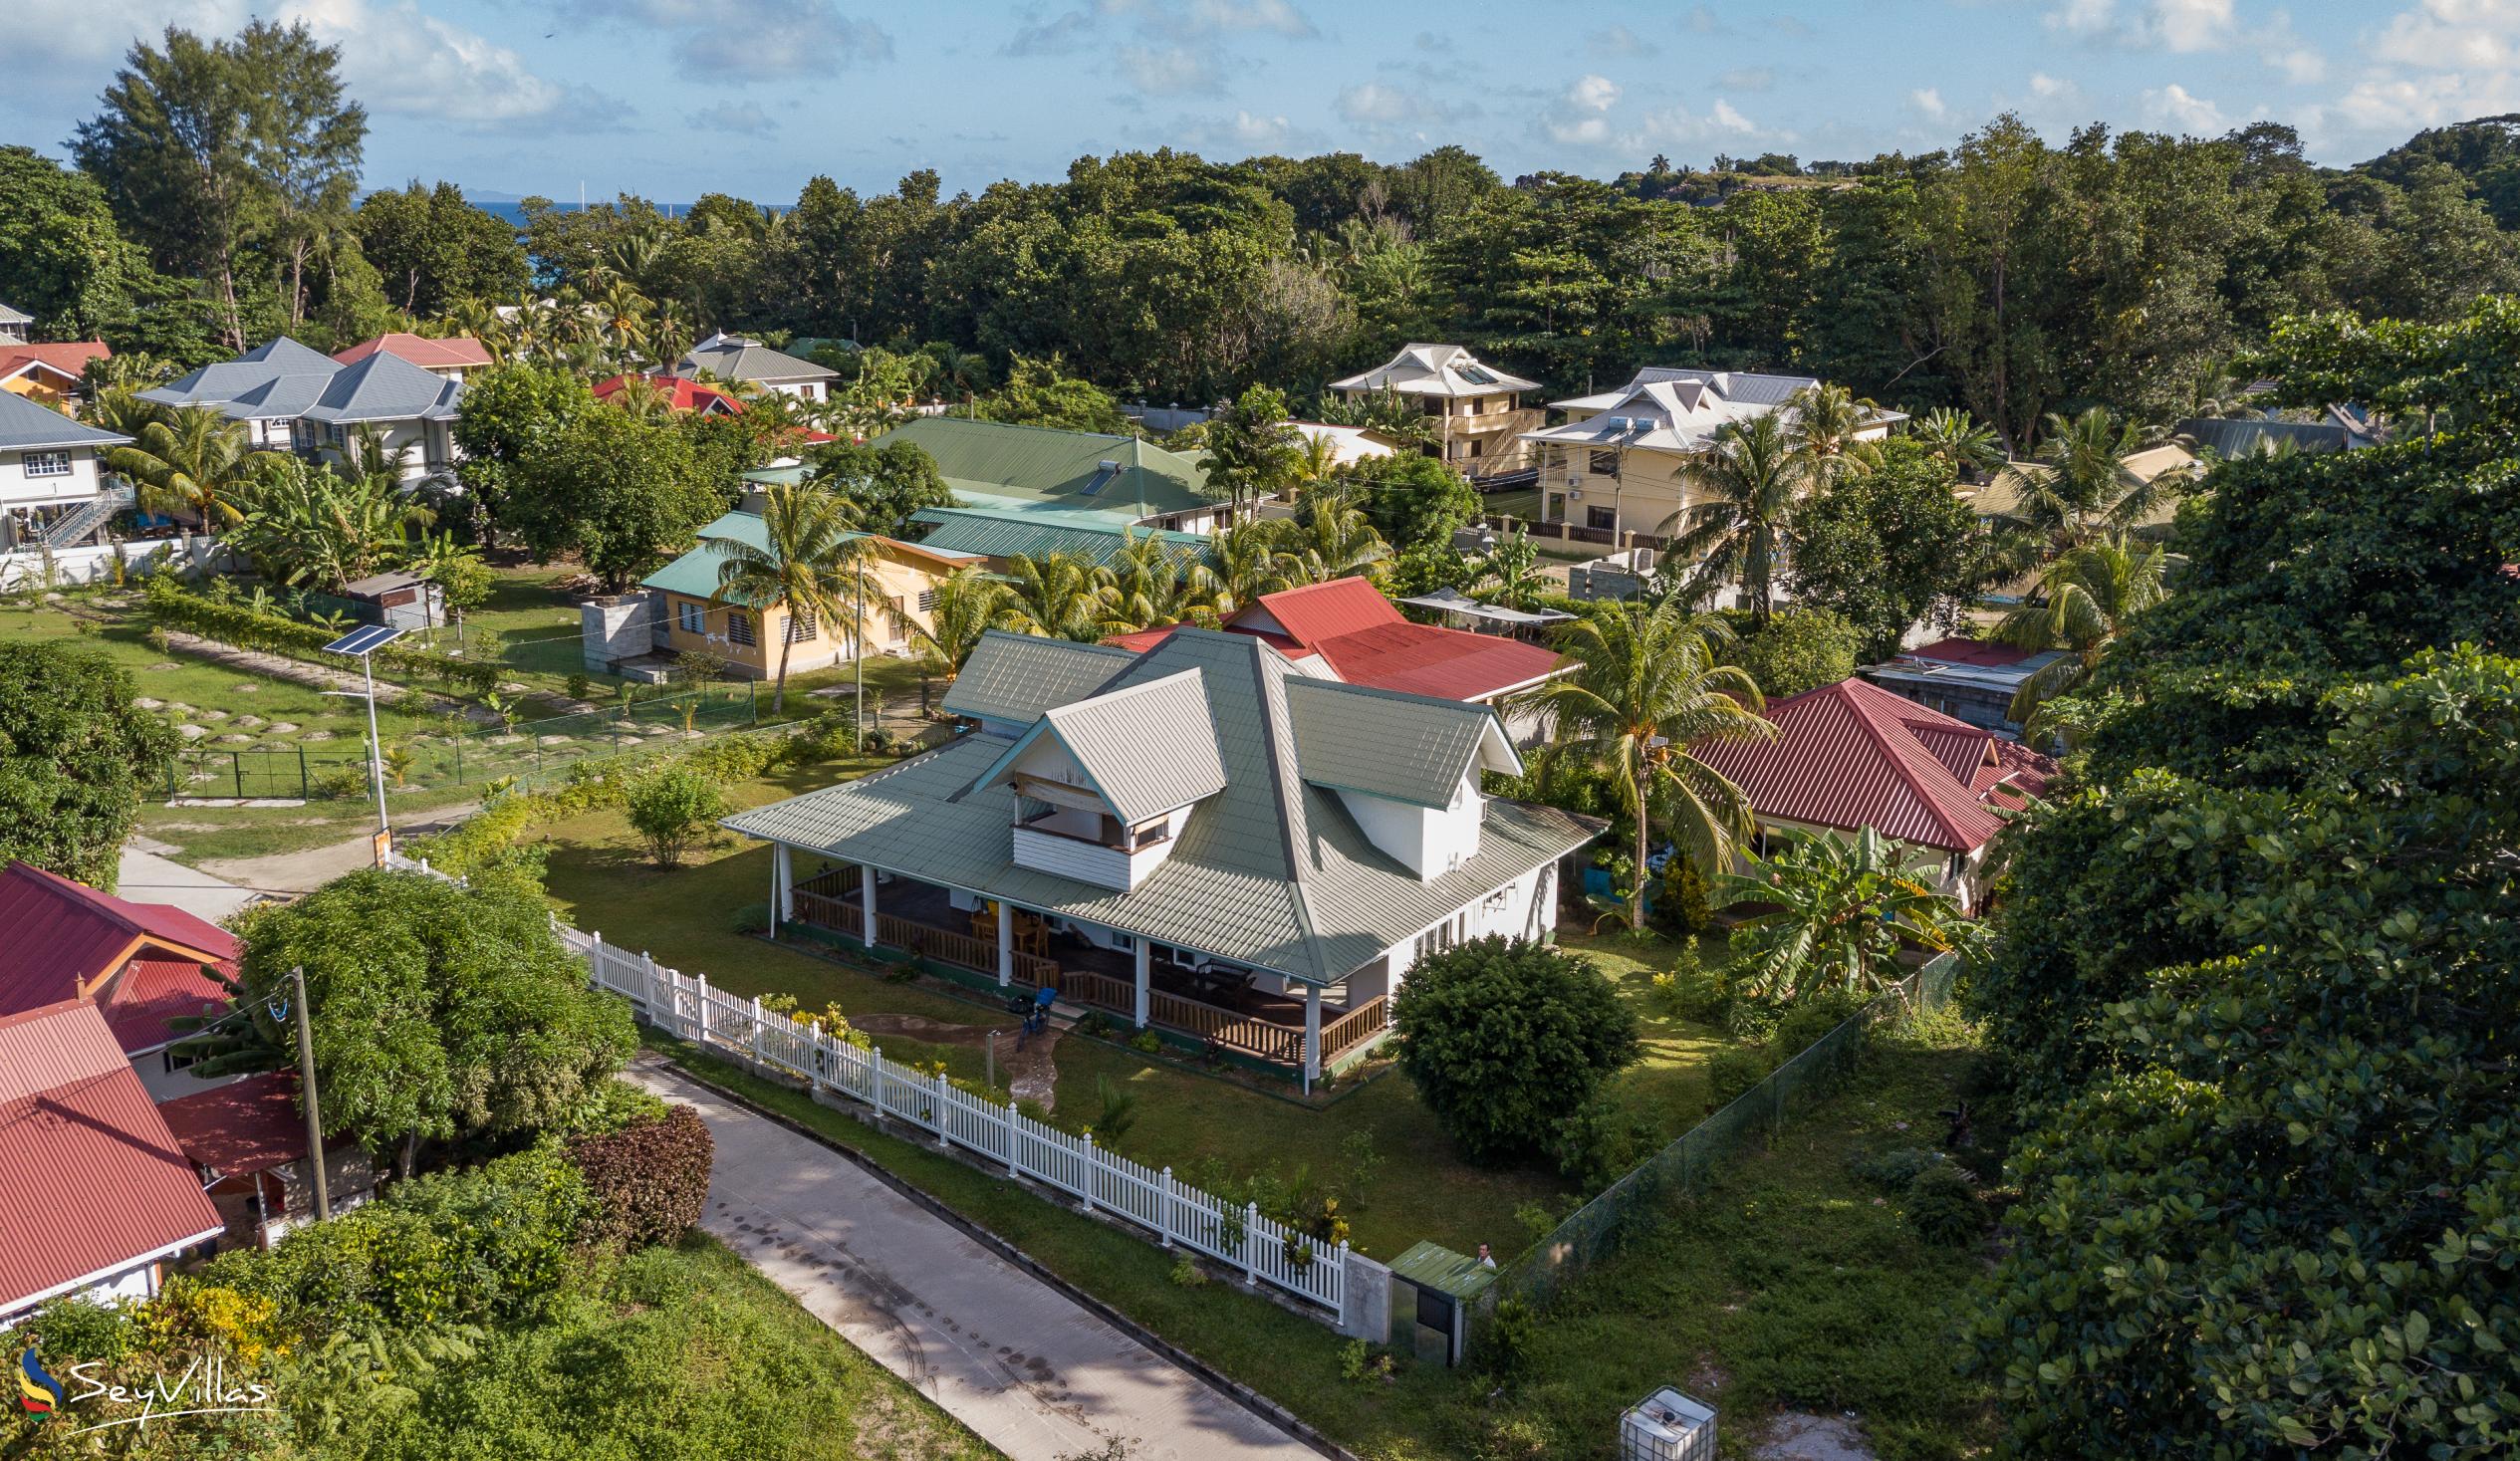 Foto 5: Casa Livingston - Aussenbereich - La Digue (Seychellen)